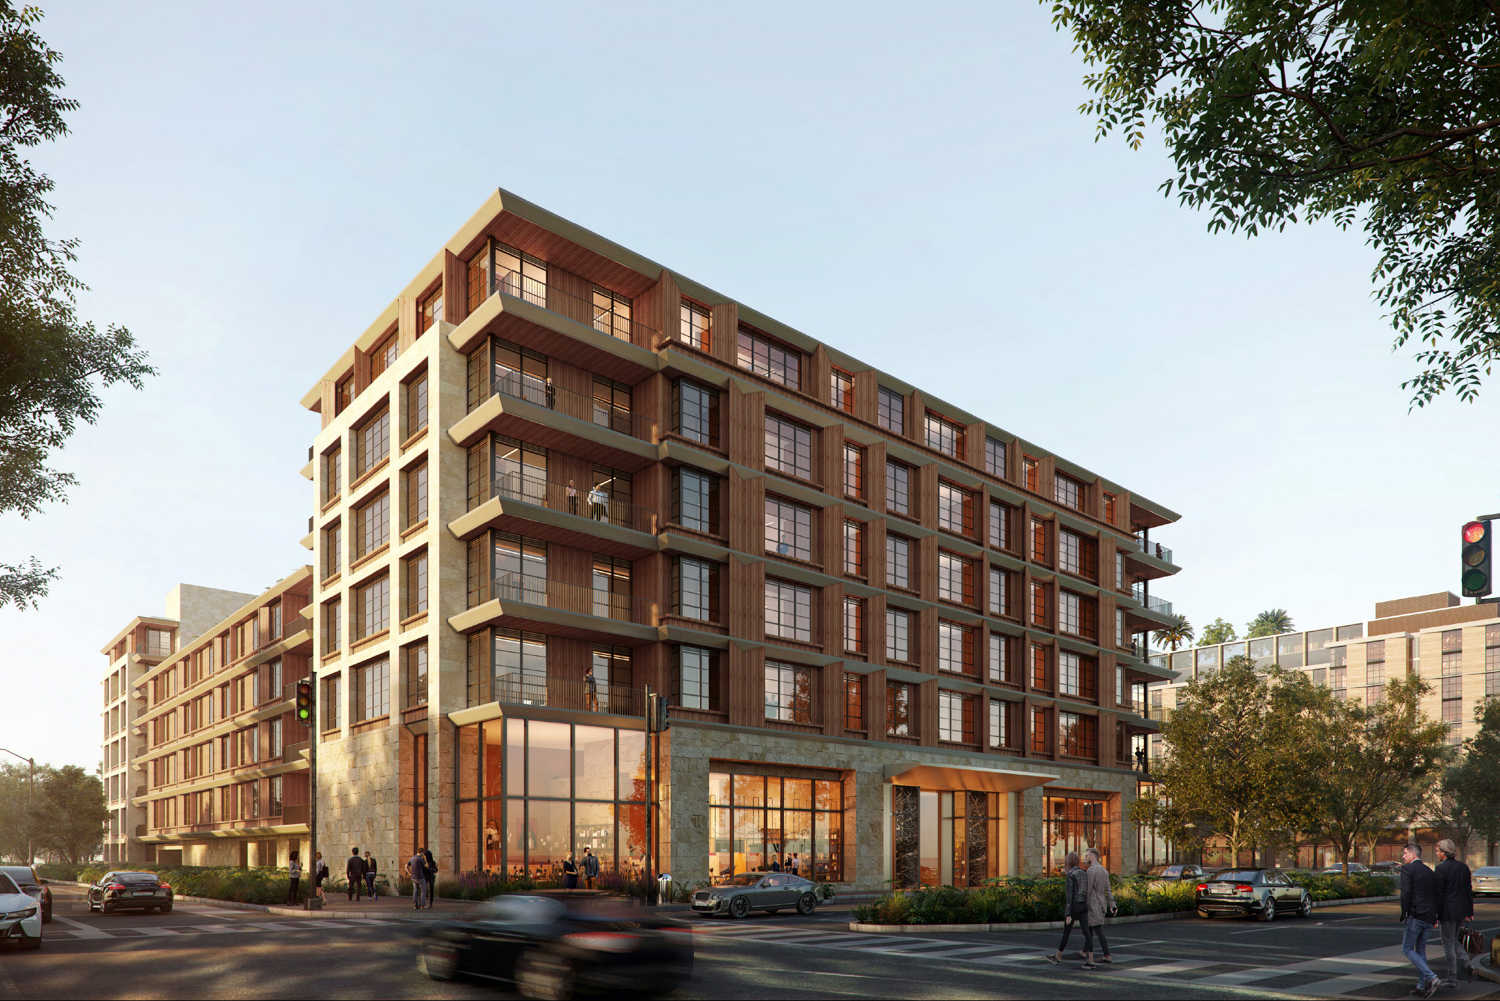 Related Santa Clara Block 5C residential building, rendering via Gensler design by Foster and Partners